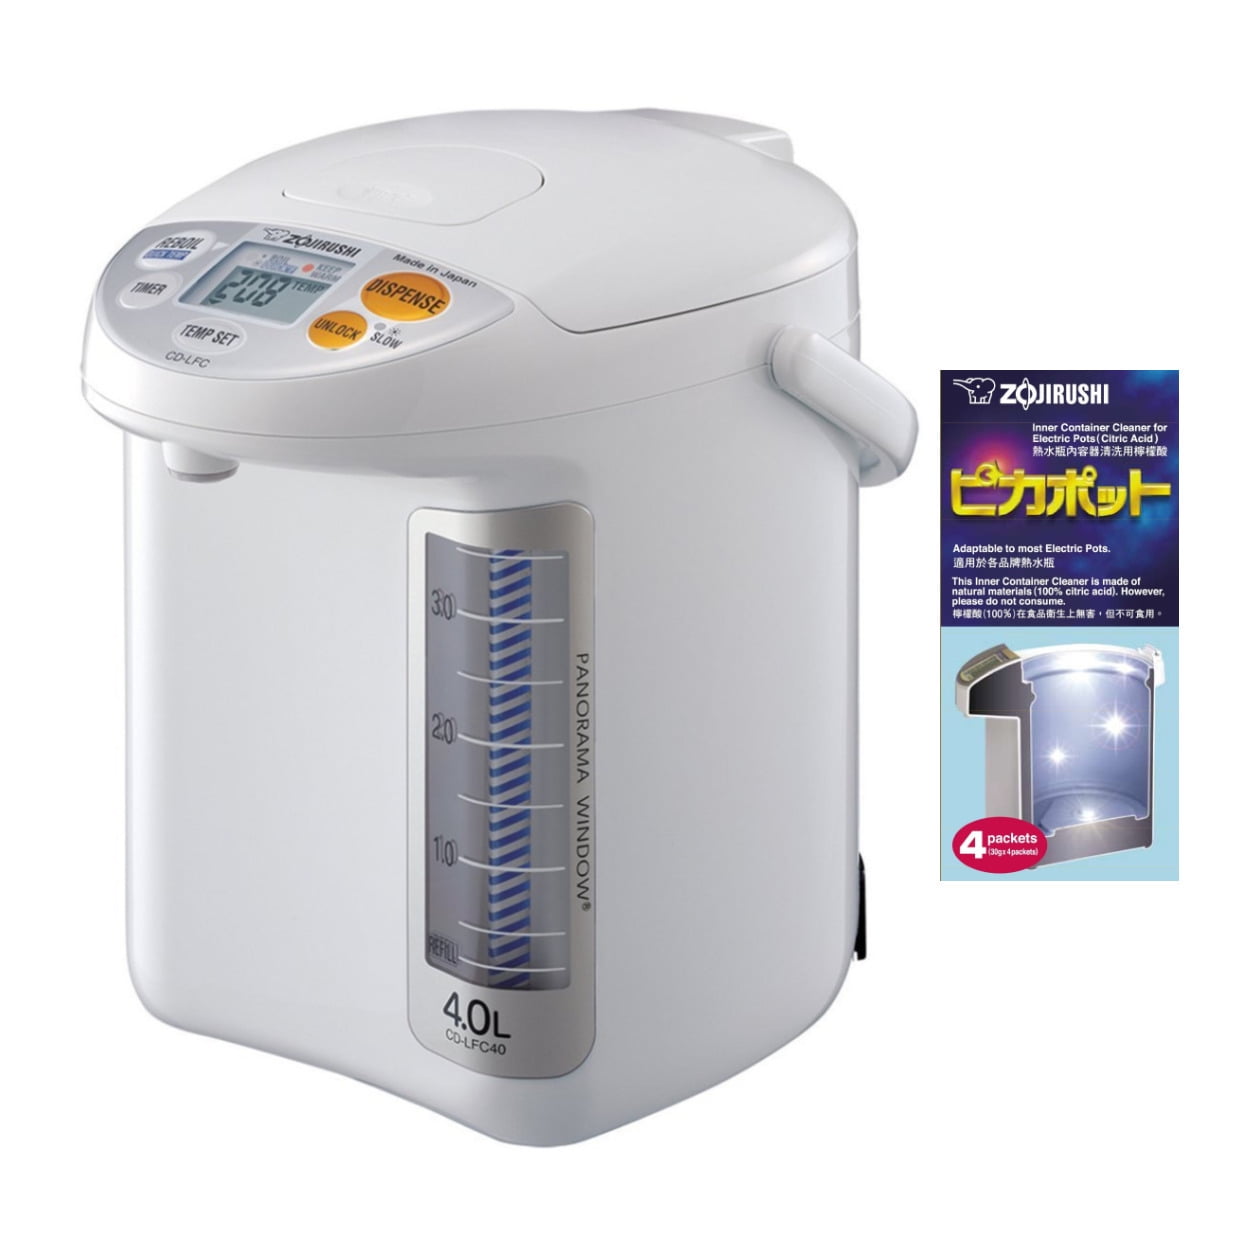 Zojirushi CD-LFC40 Micom Water Boiler and Warmer (135 oz) with Descaling  Agents 